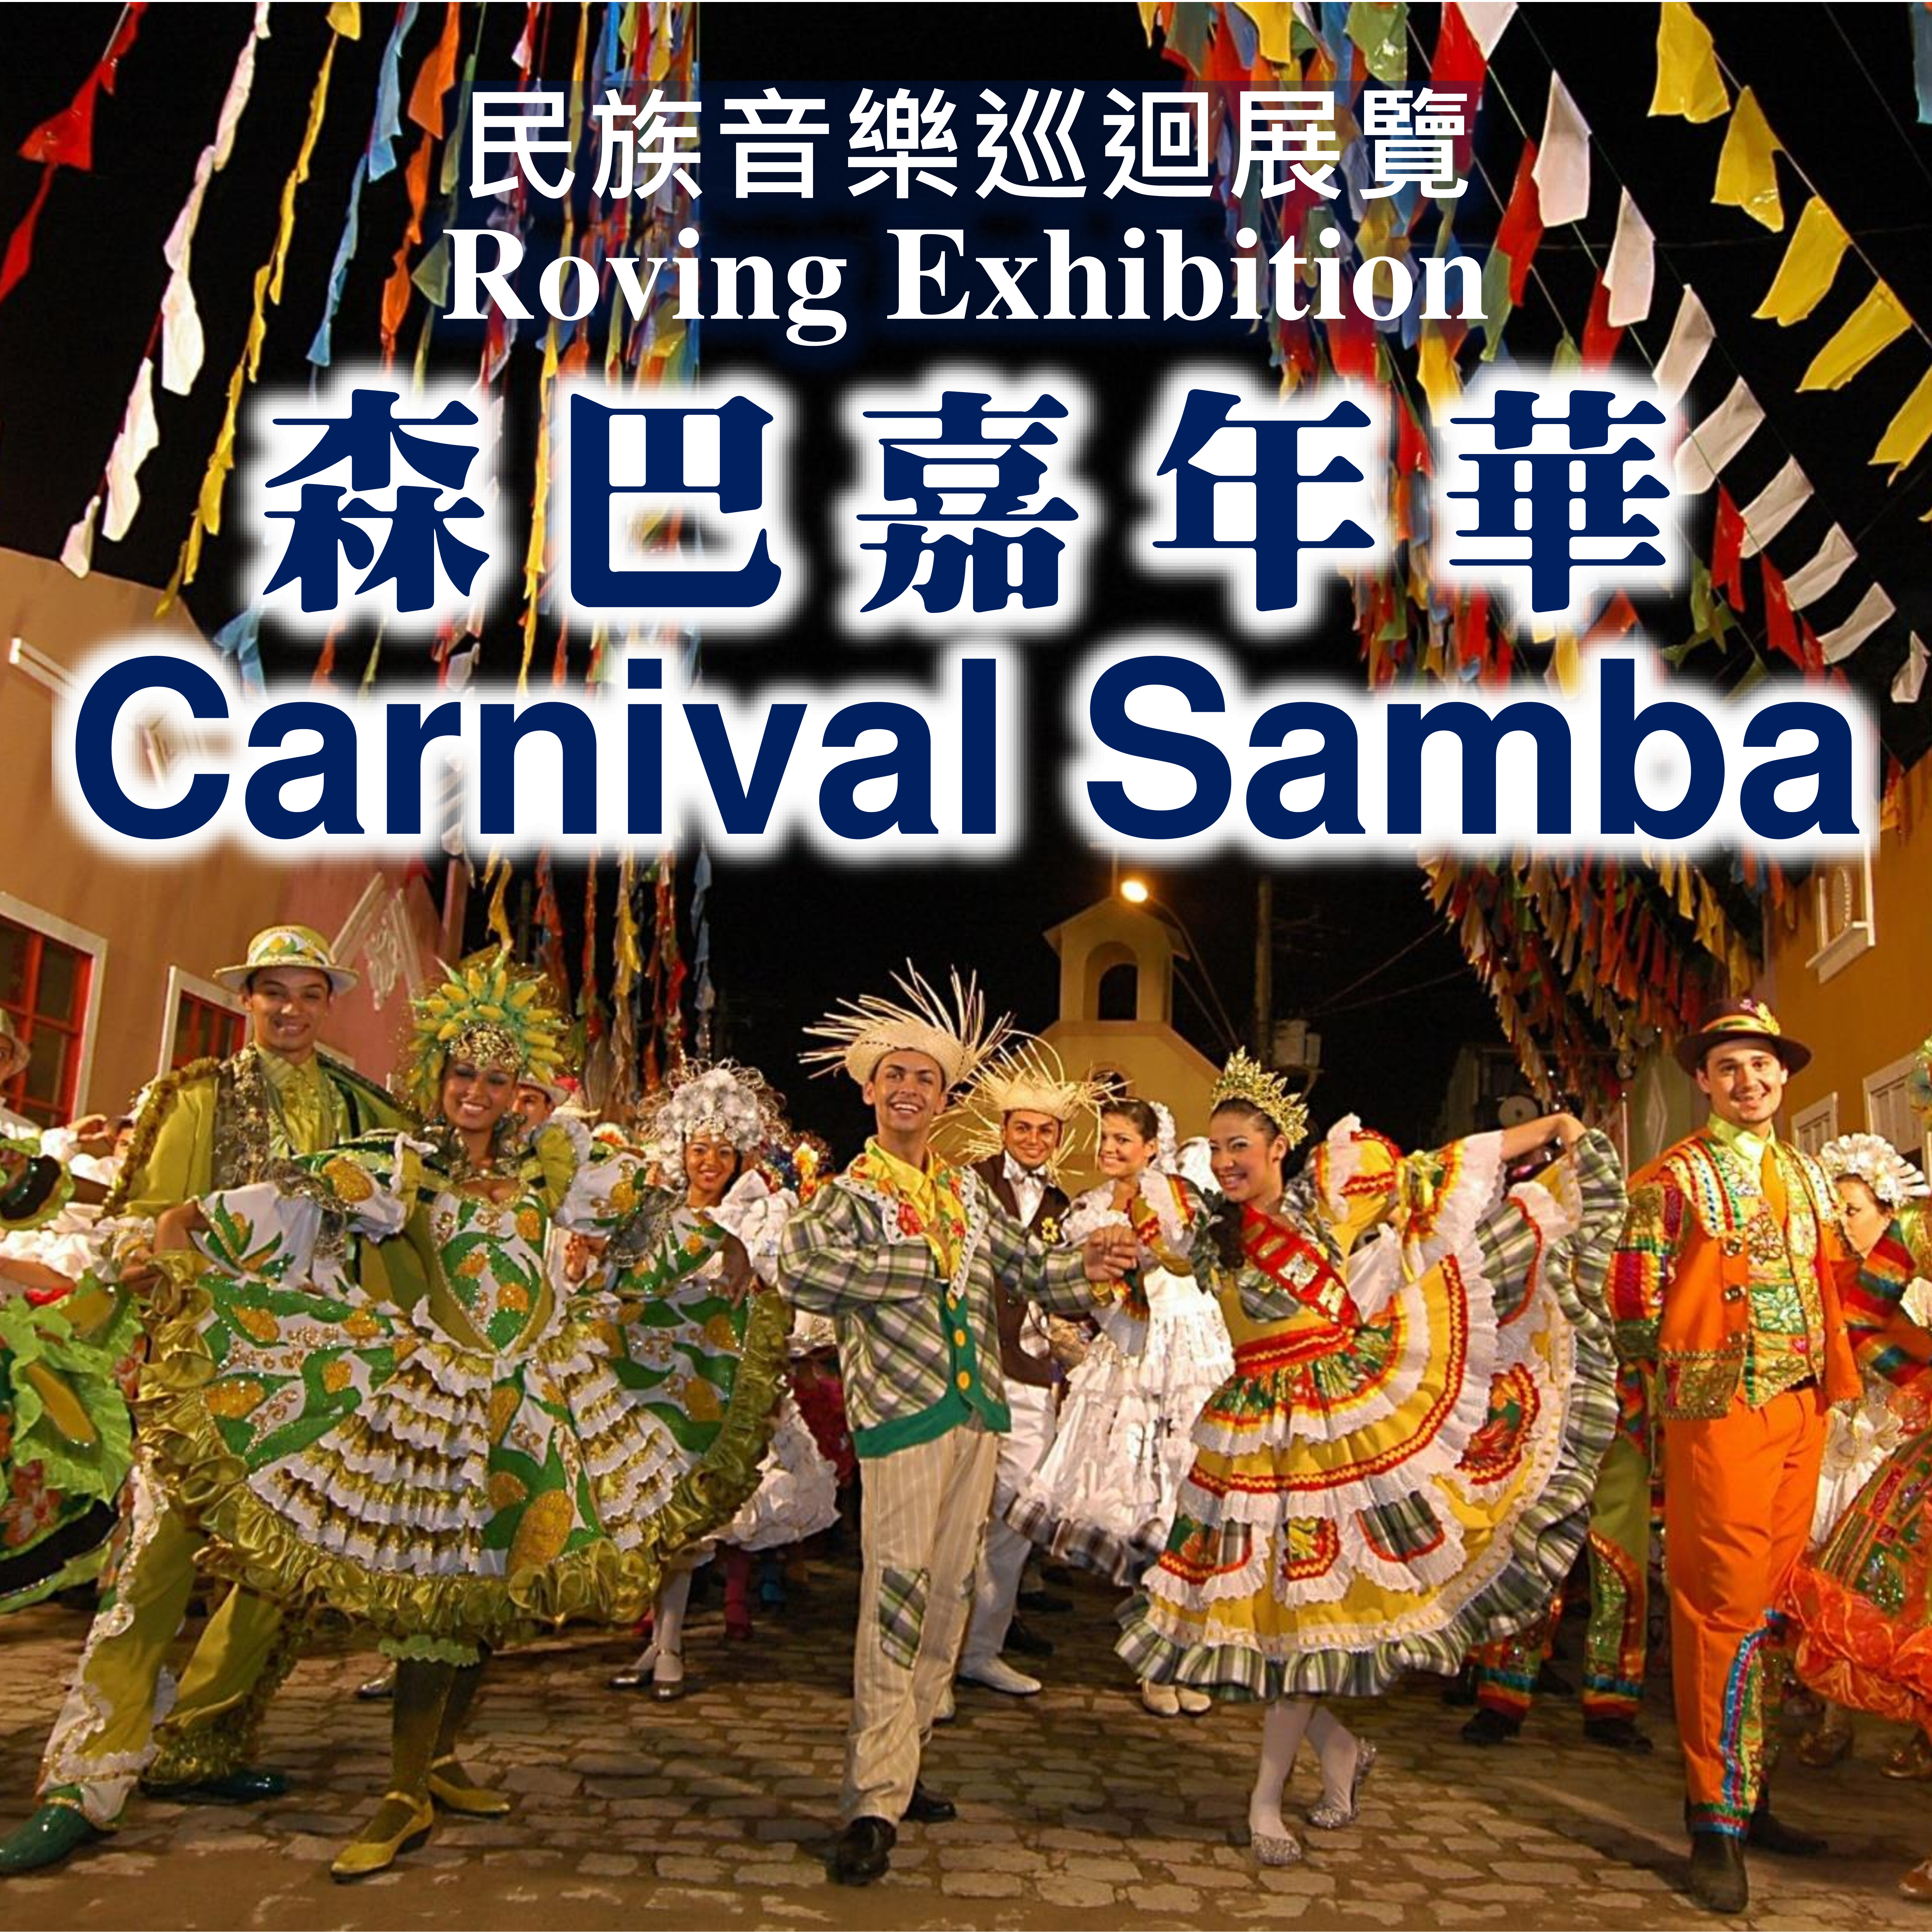 Roving Exhibition on "Carnival Samba"